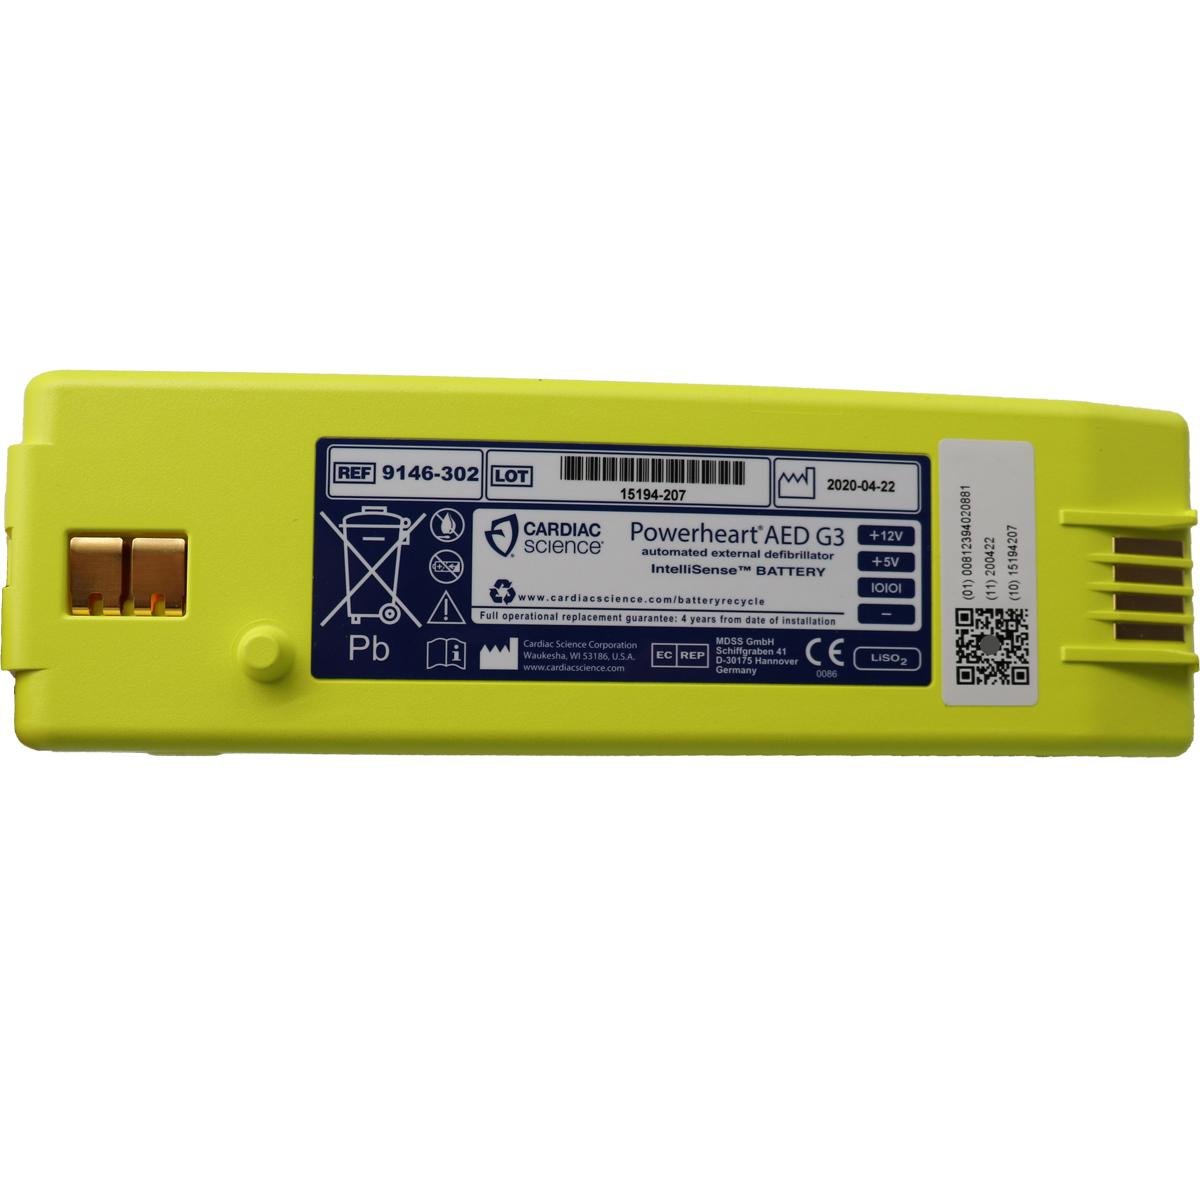 美国心科Powerheart AED G3除颤仪电池9146-302